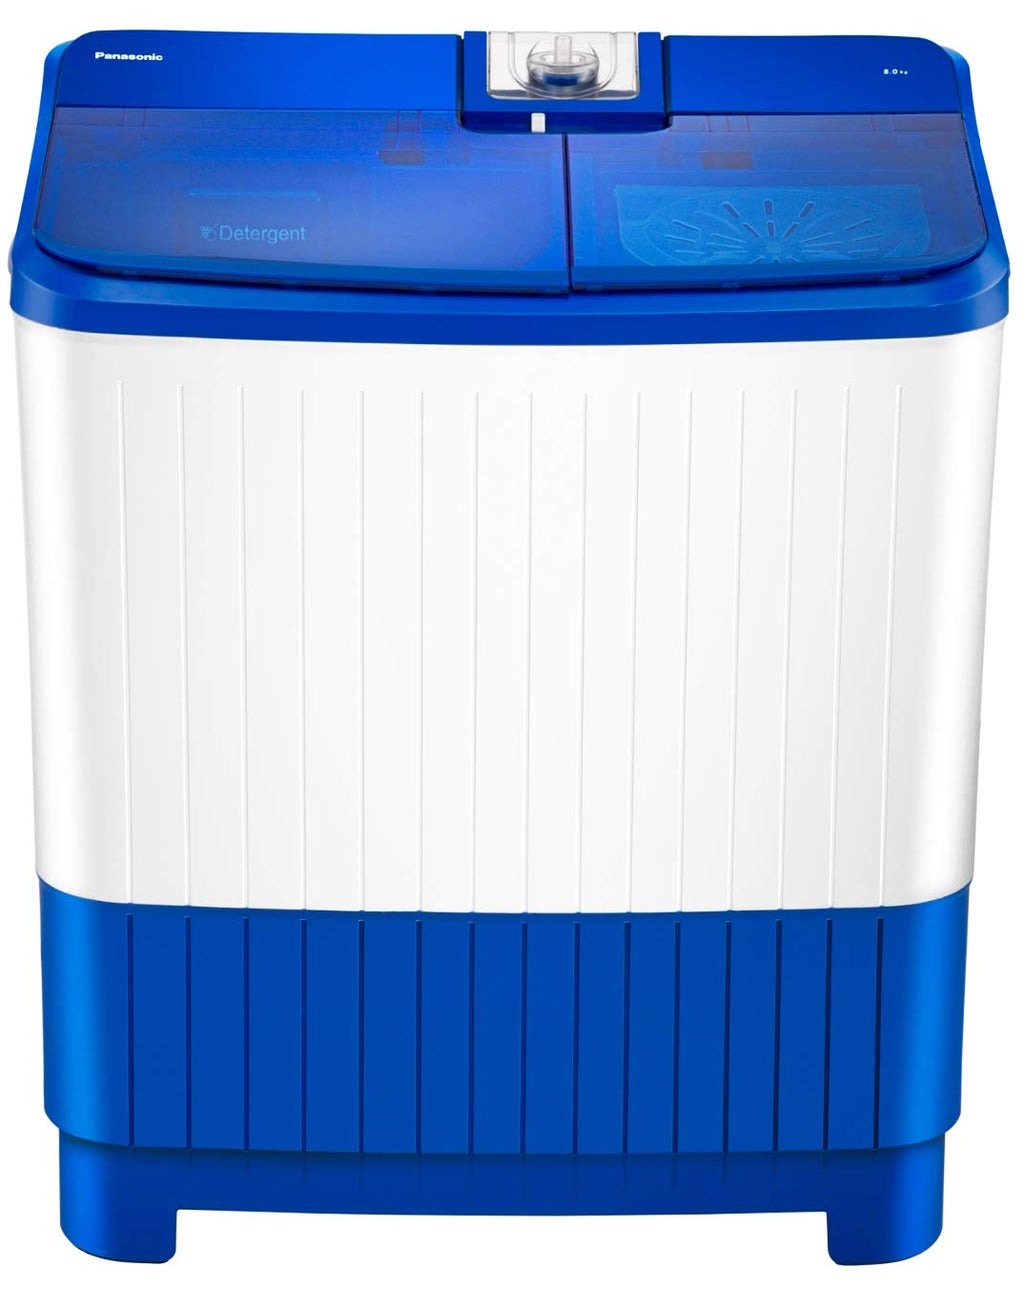 Panasonic 8 Kg Semi-automatic Top Loading Washing Machine Na-w80b5arb Blue